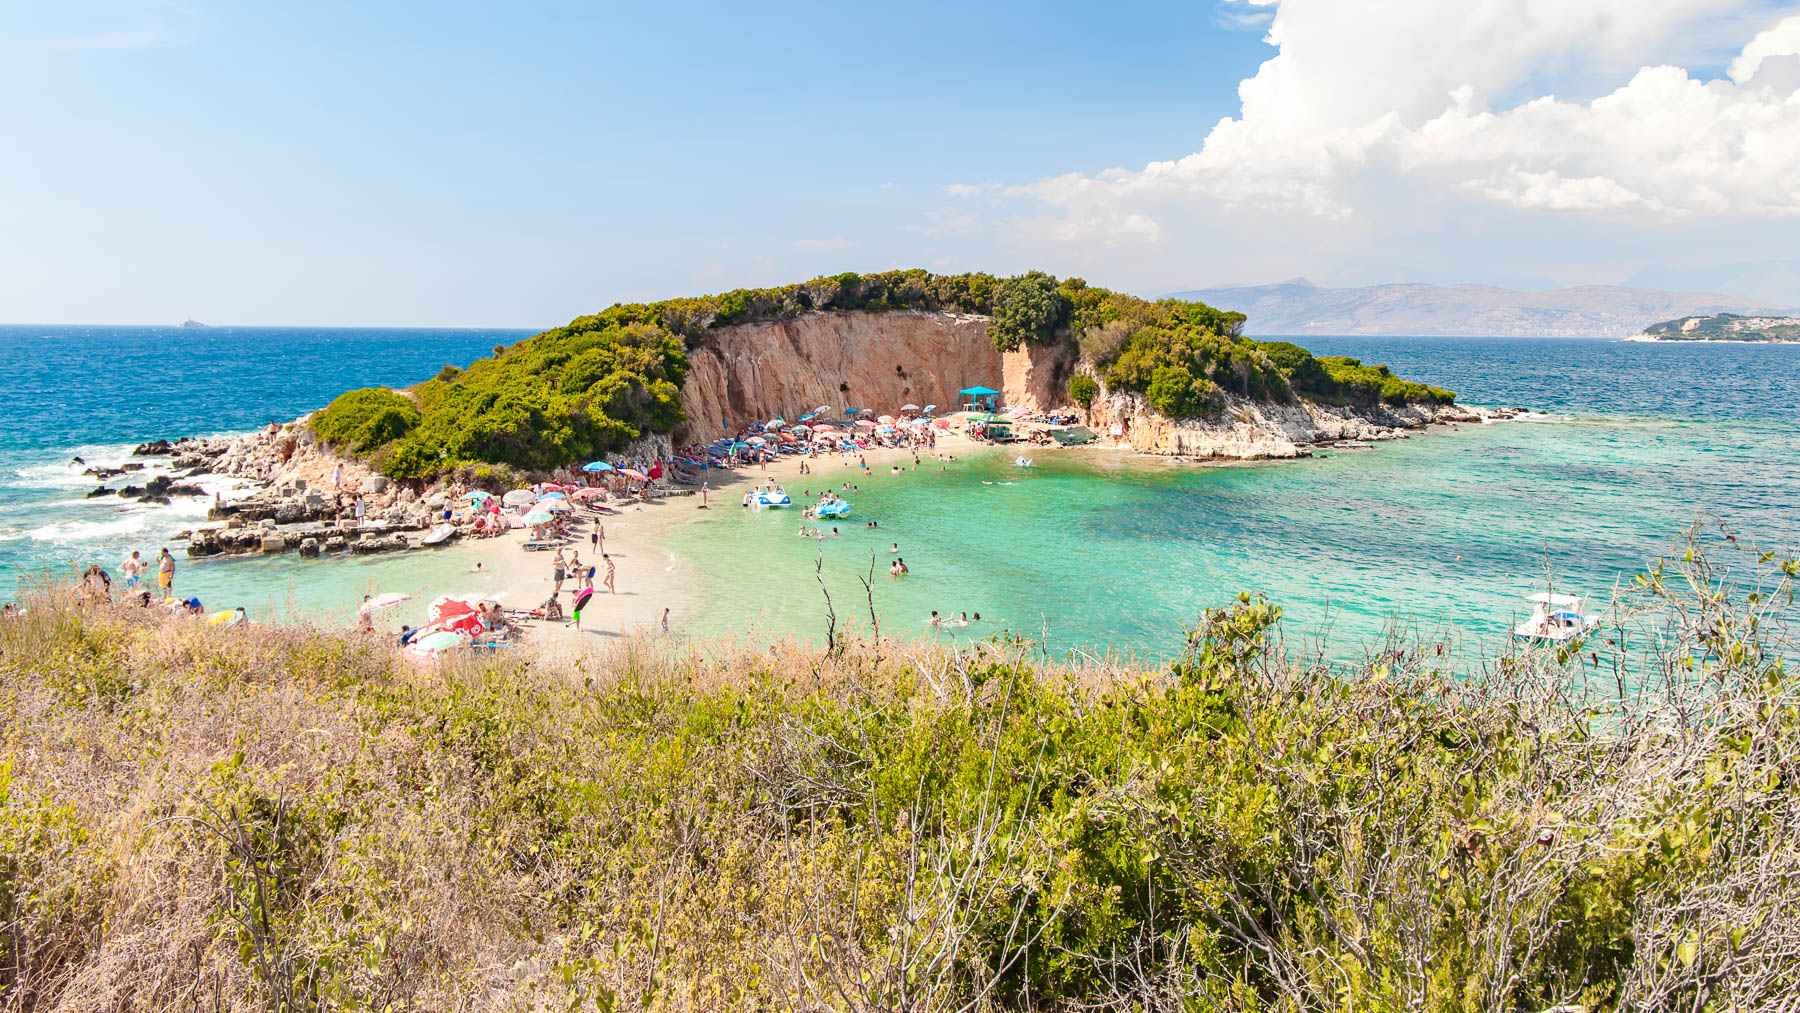 The Albanian Riviera is no longer a 'secret'